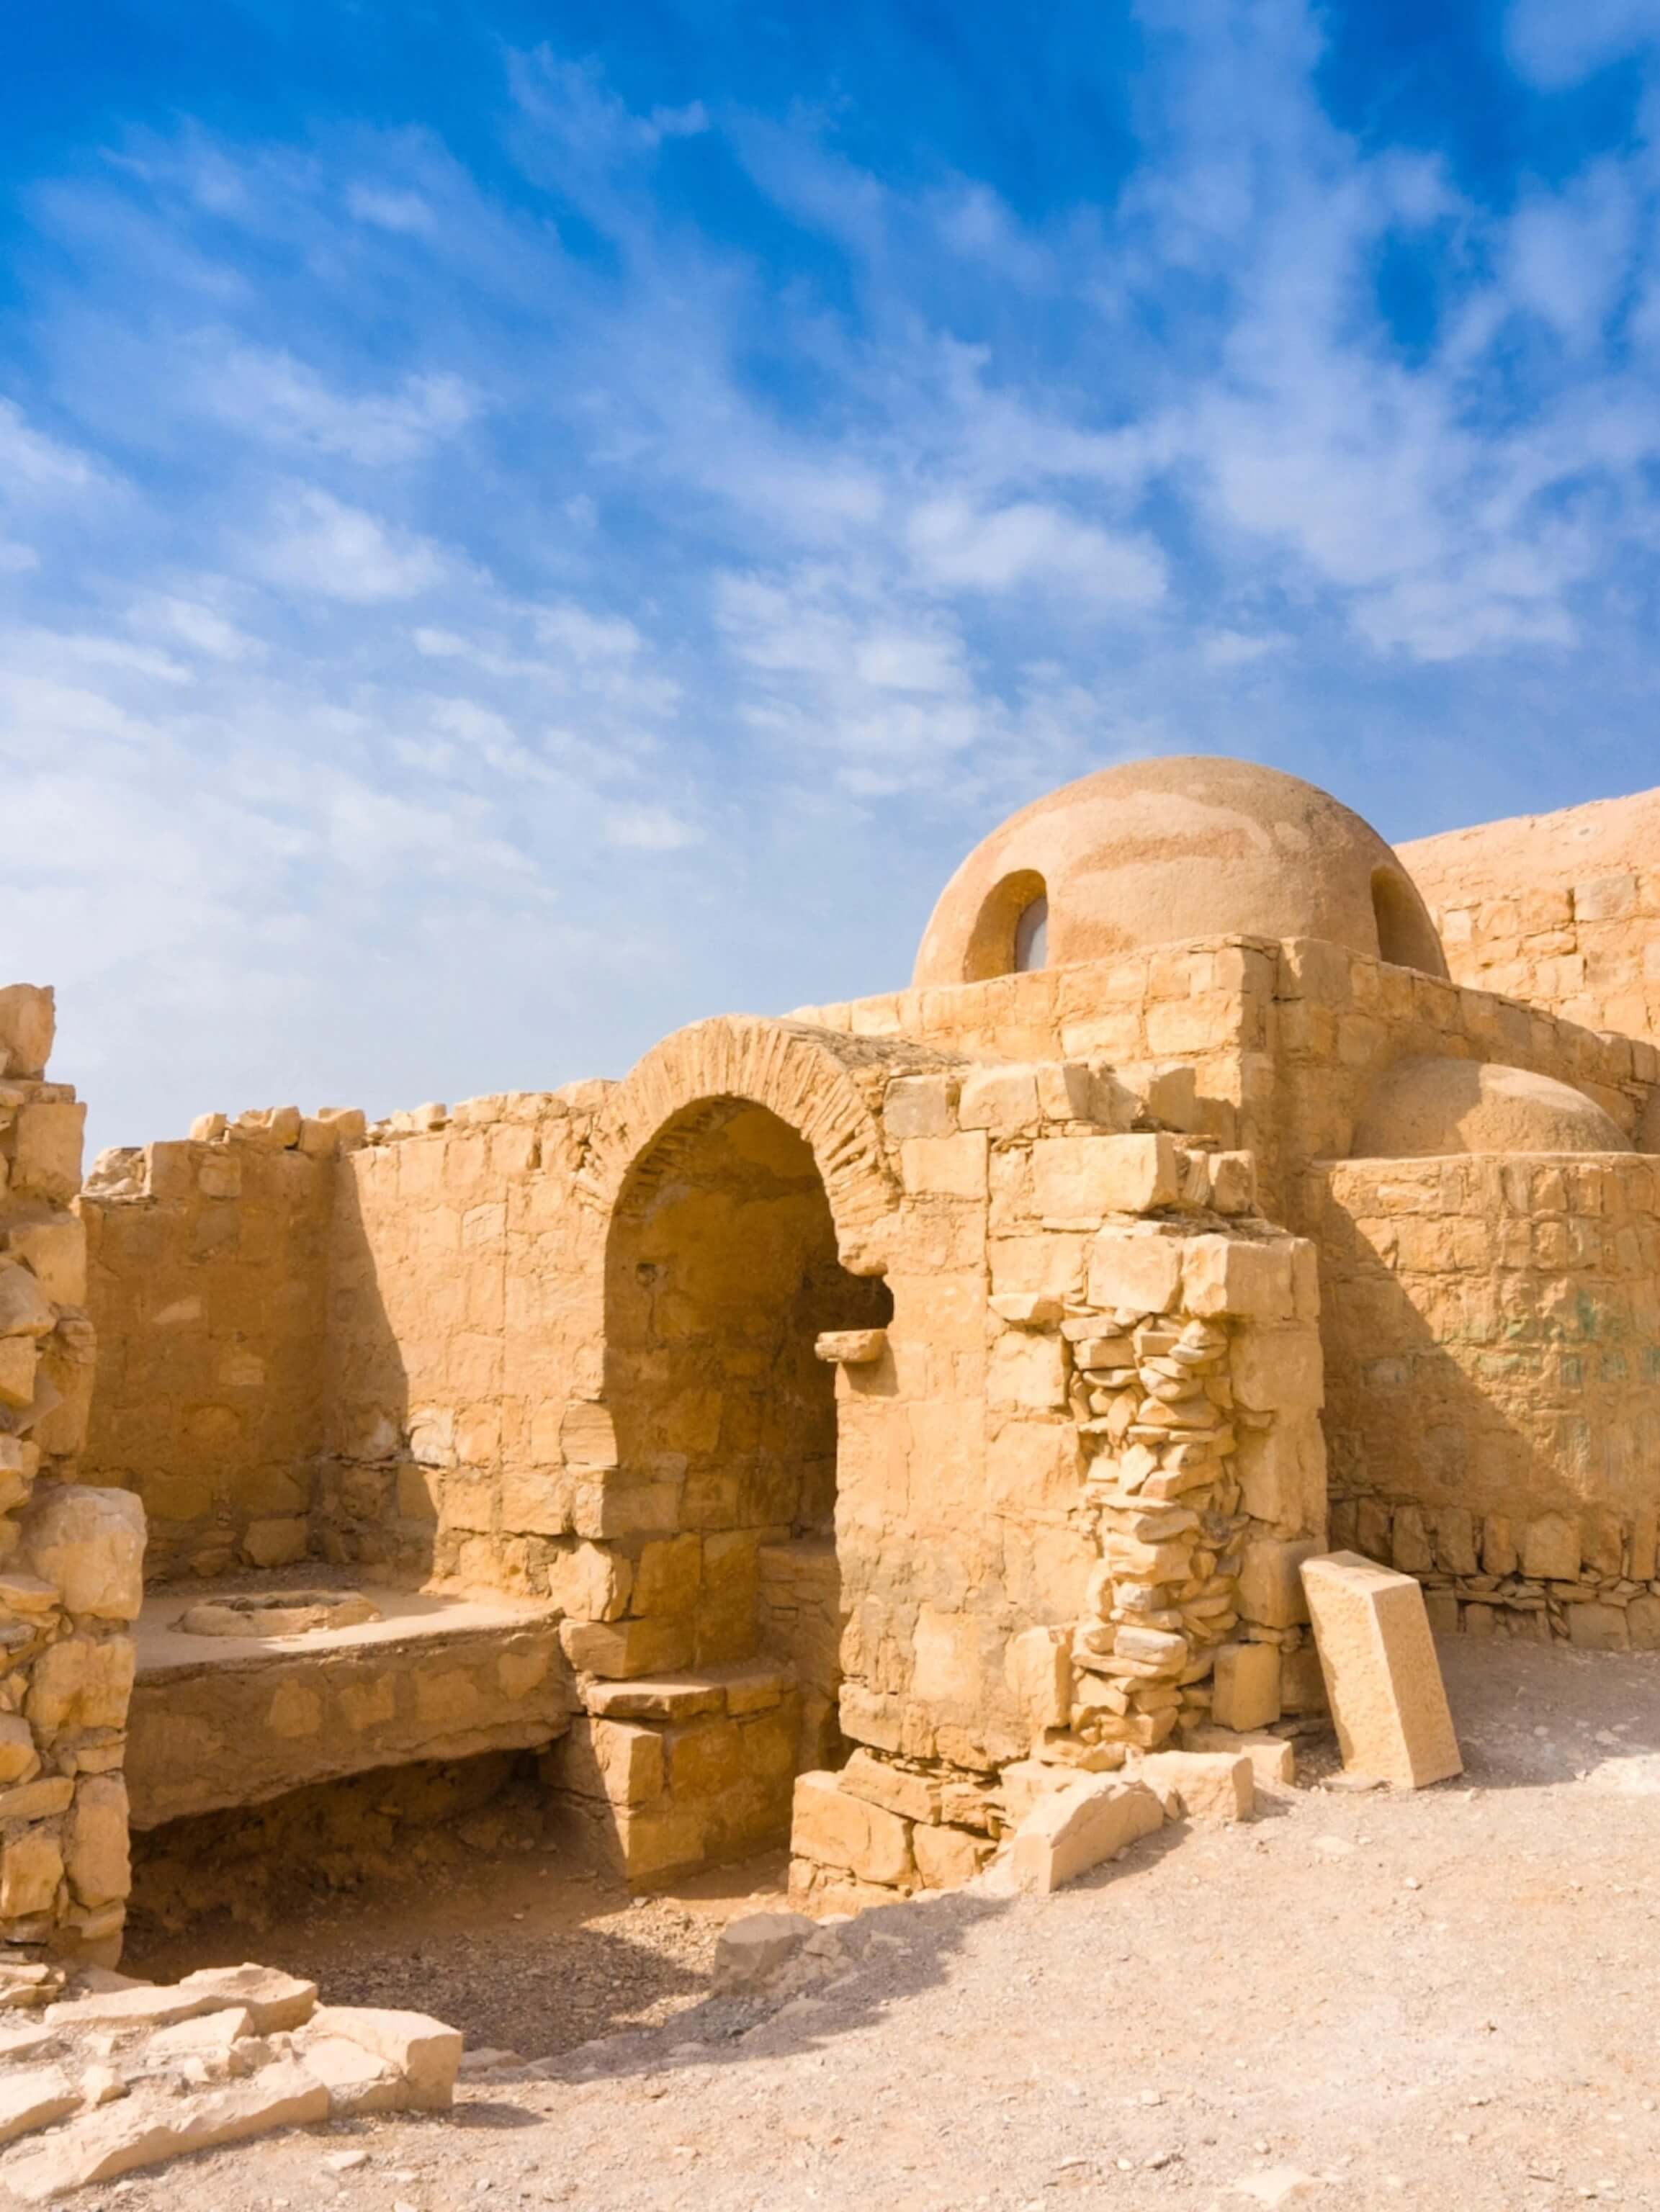 Jordanu2019s remaining desert castles, Qusayr Amra